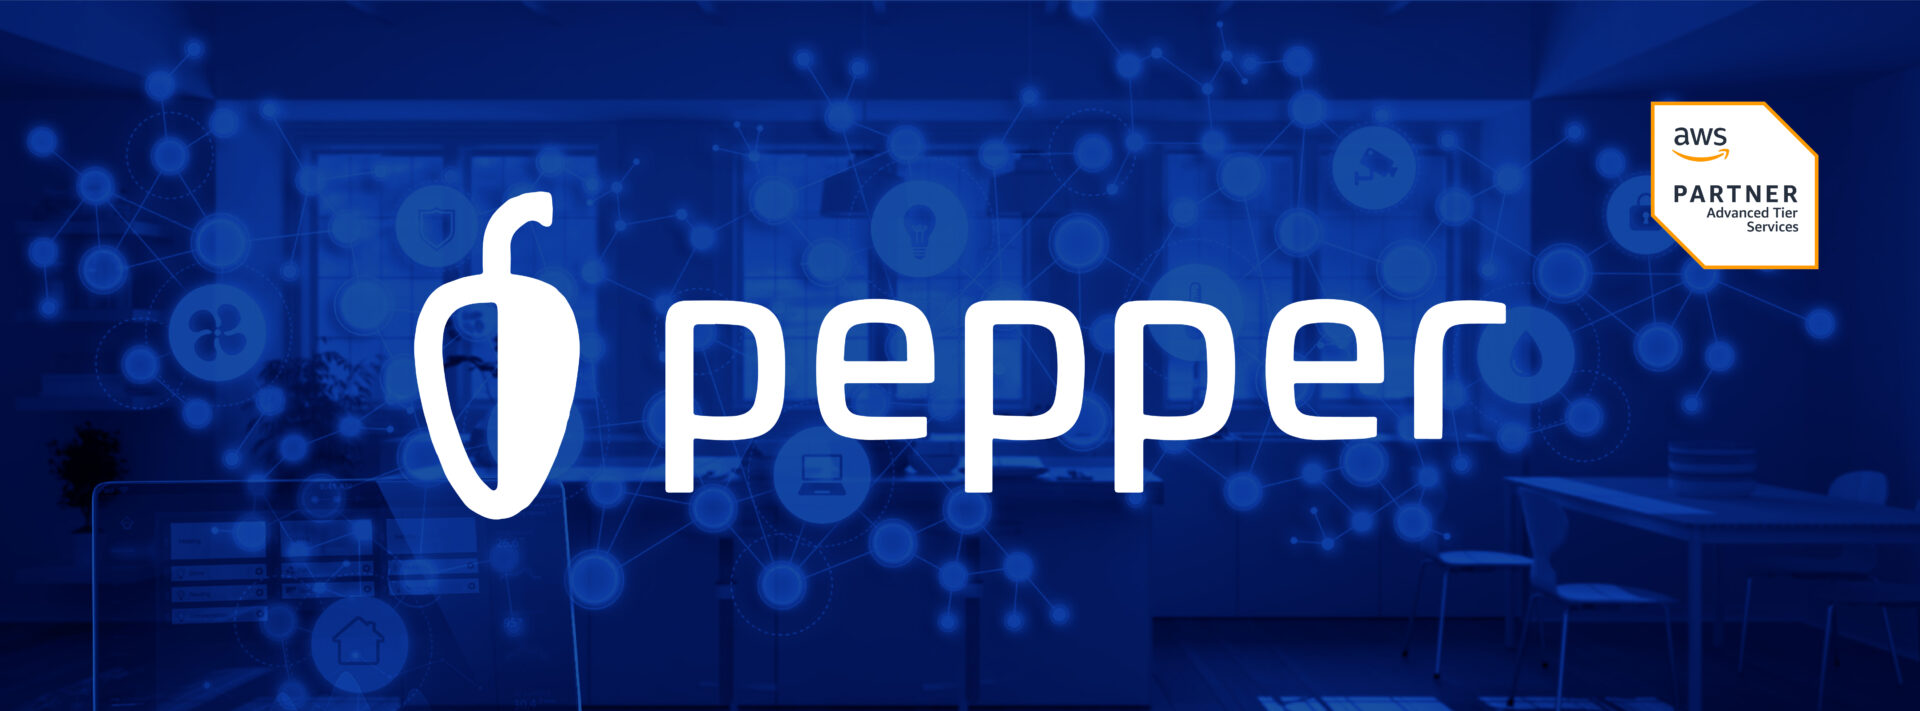 27G Pepper Case Study Web Header